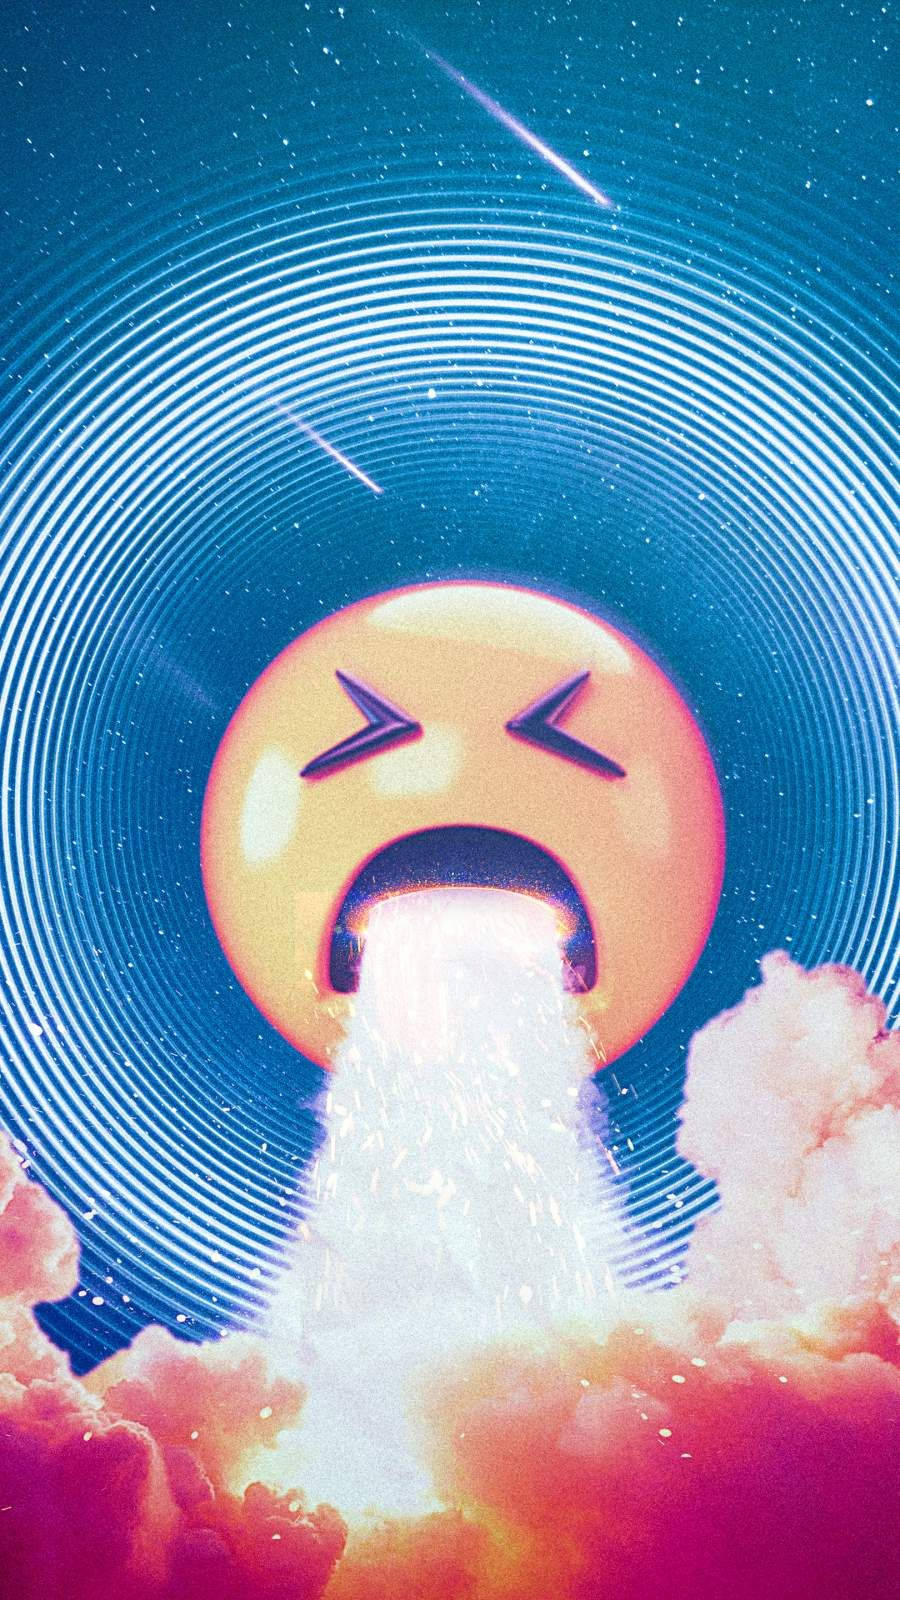 Nauseous Face Emoji Abstract Illustration Wallpaper